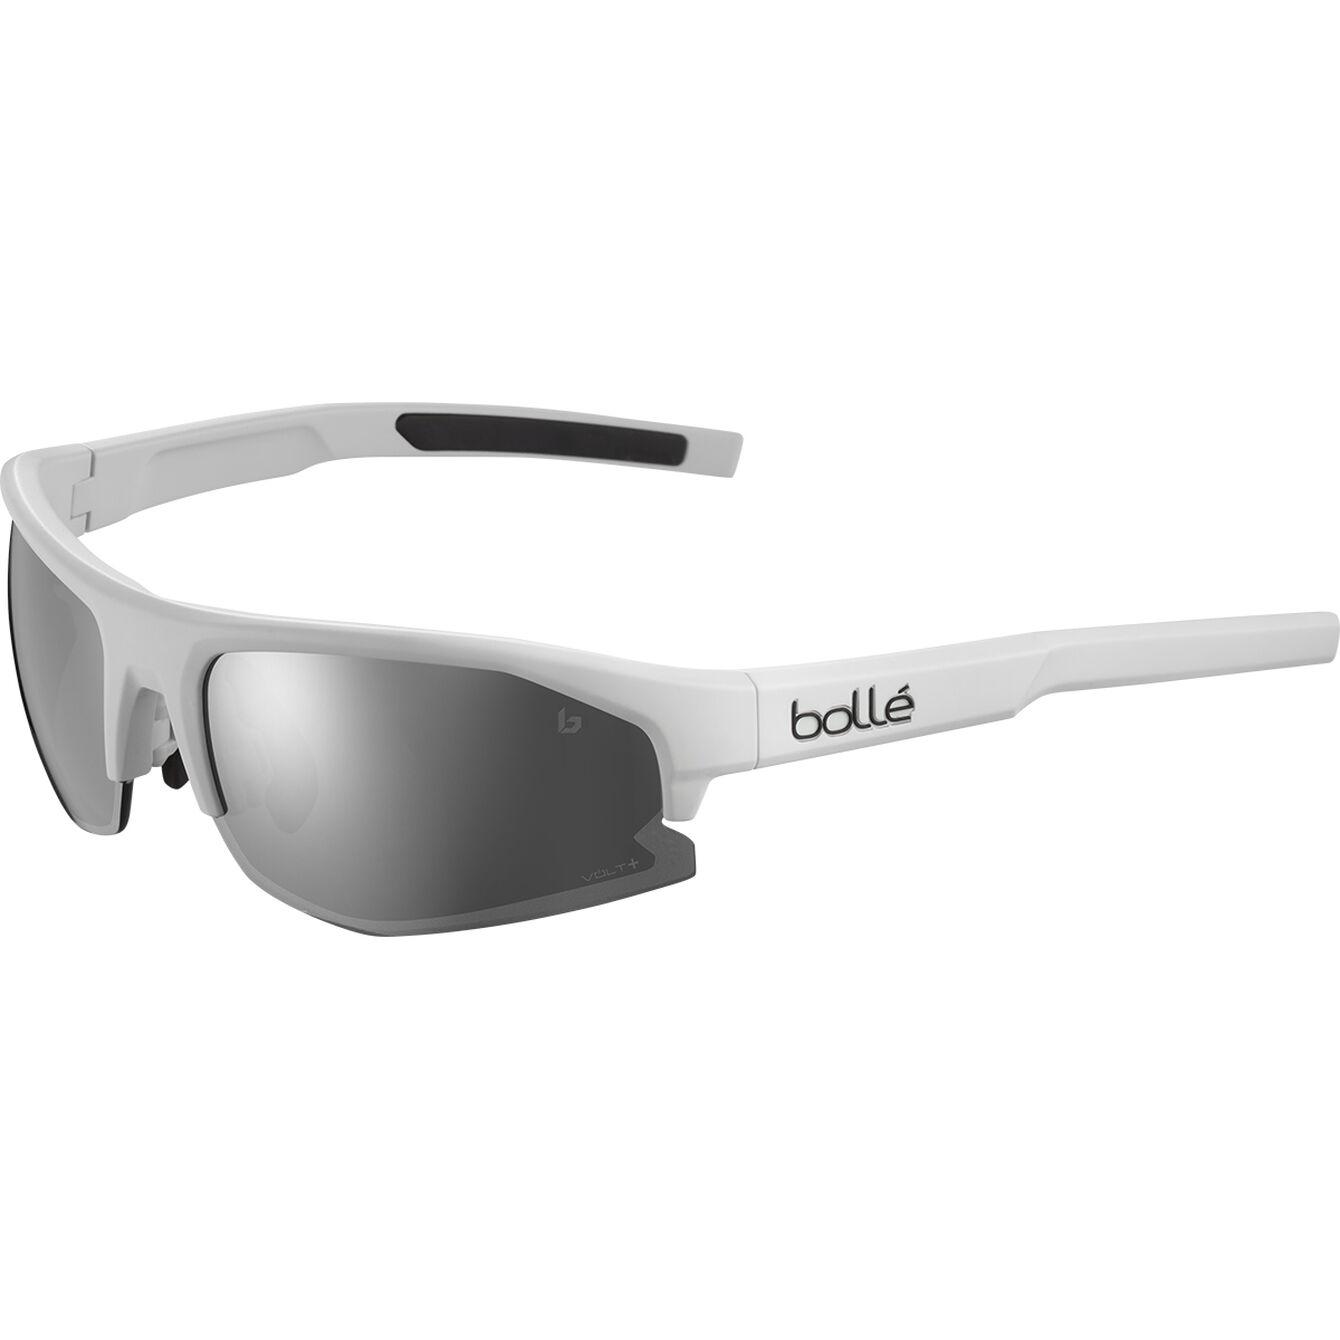 Bolle Bolt 2.0 S Offwhite Polarized Sunglasses - White/off White/matte